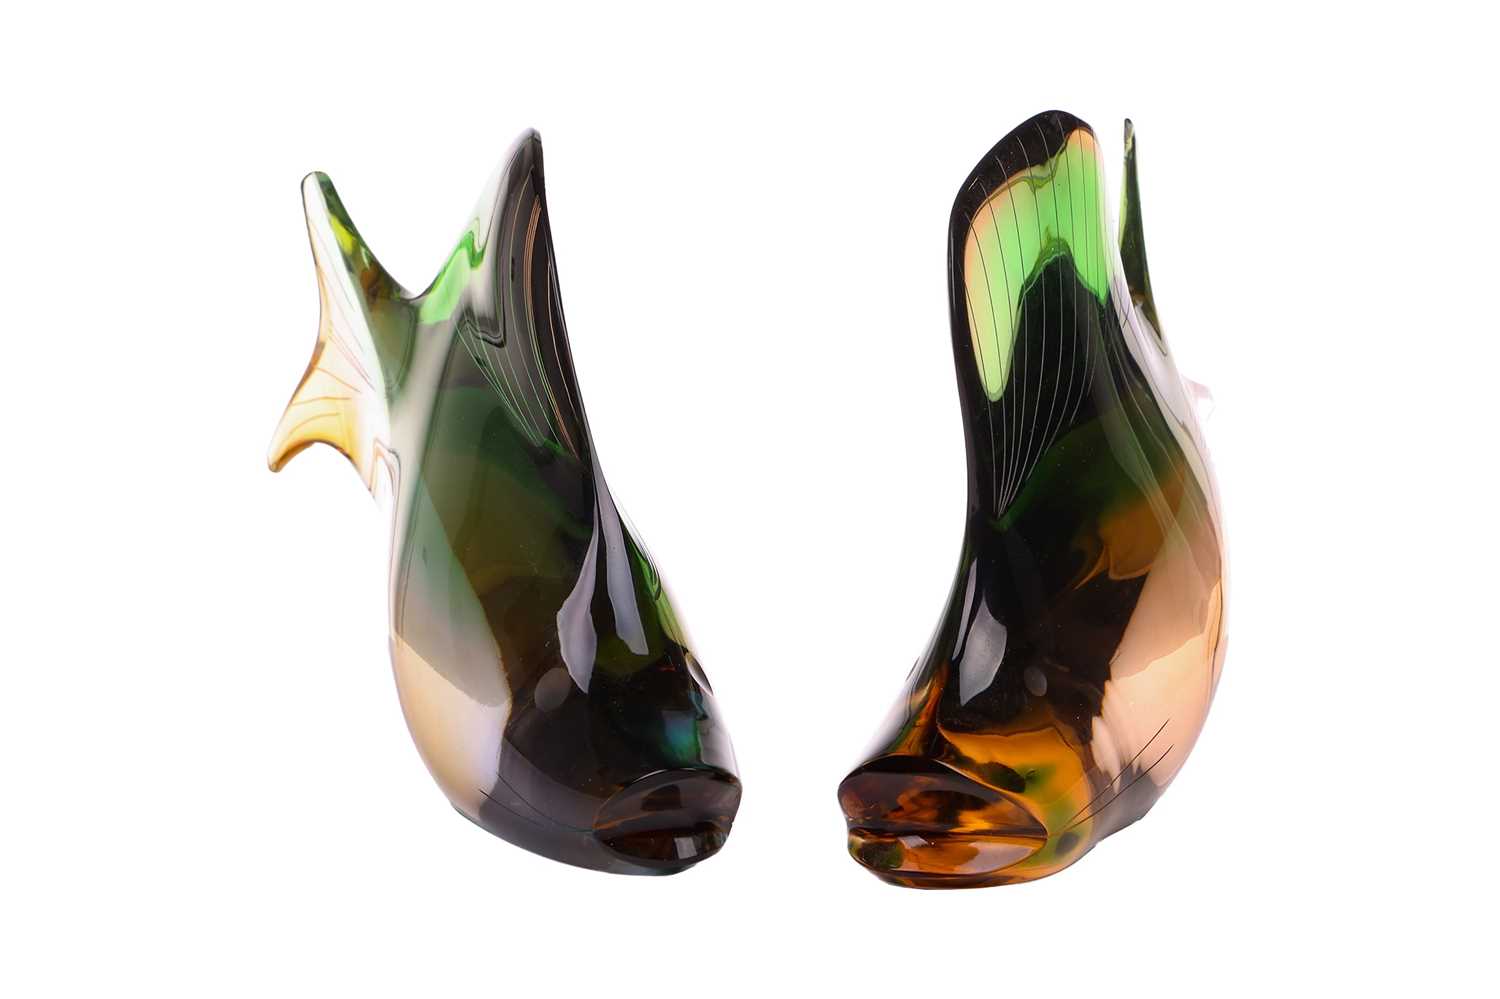 Rozinek and Honzik for Exbor (Czechoslovakia), two glass fish sculptures, of similar form in - Bild 2 aus 10